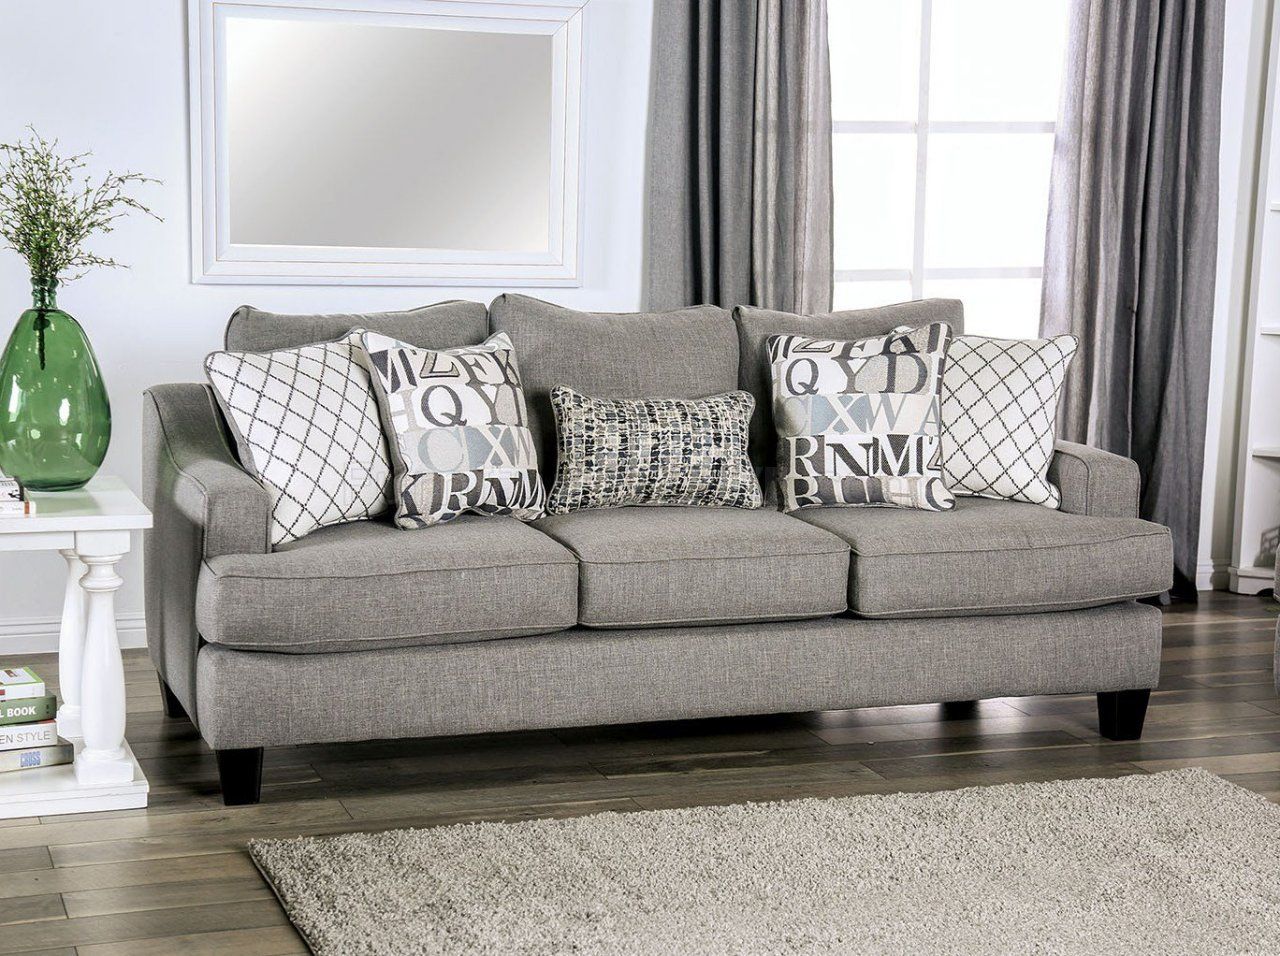 Verne Sofa Sm8330 In Bluish Gray Linen Like Fabric W/options Regarding Sofas In Bluish Grey (Gallery 8 of 20)